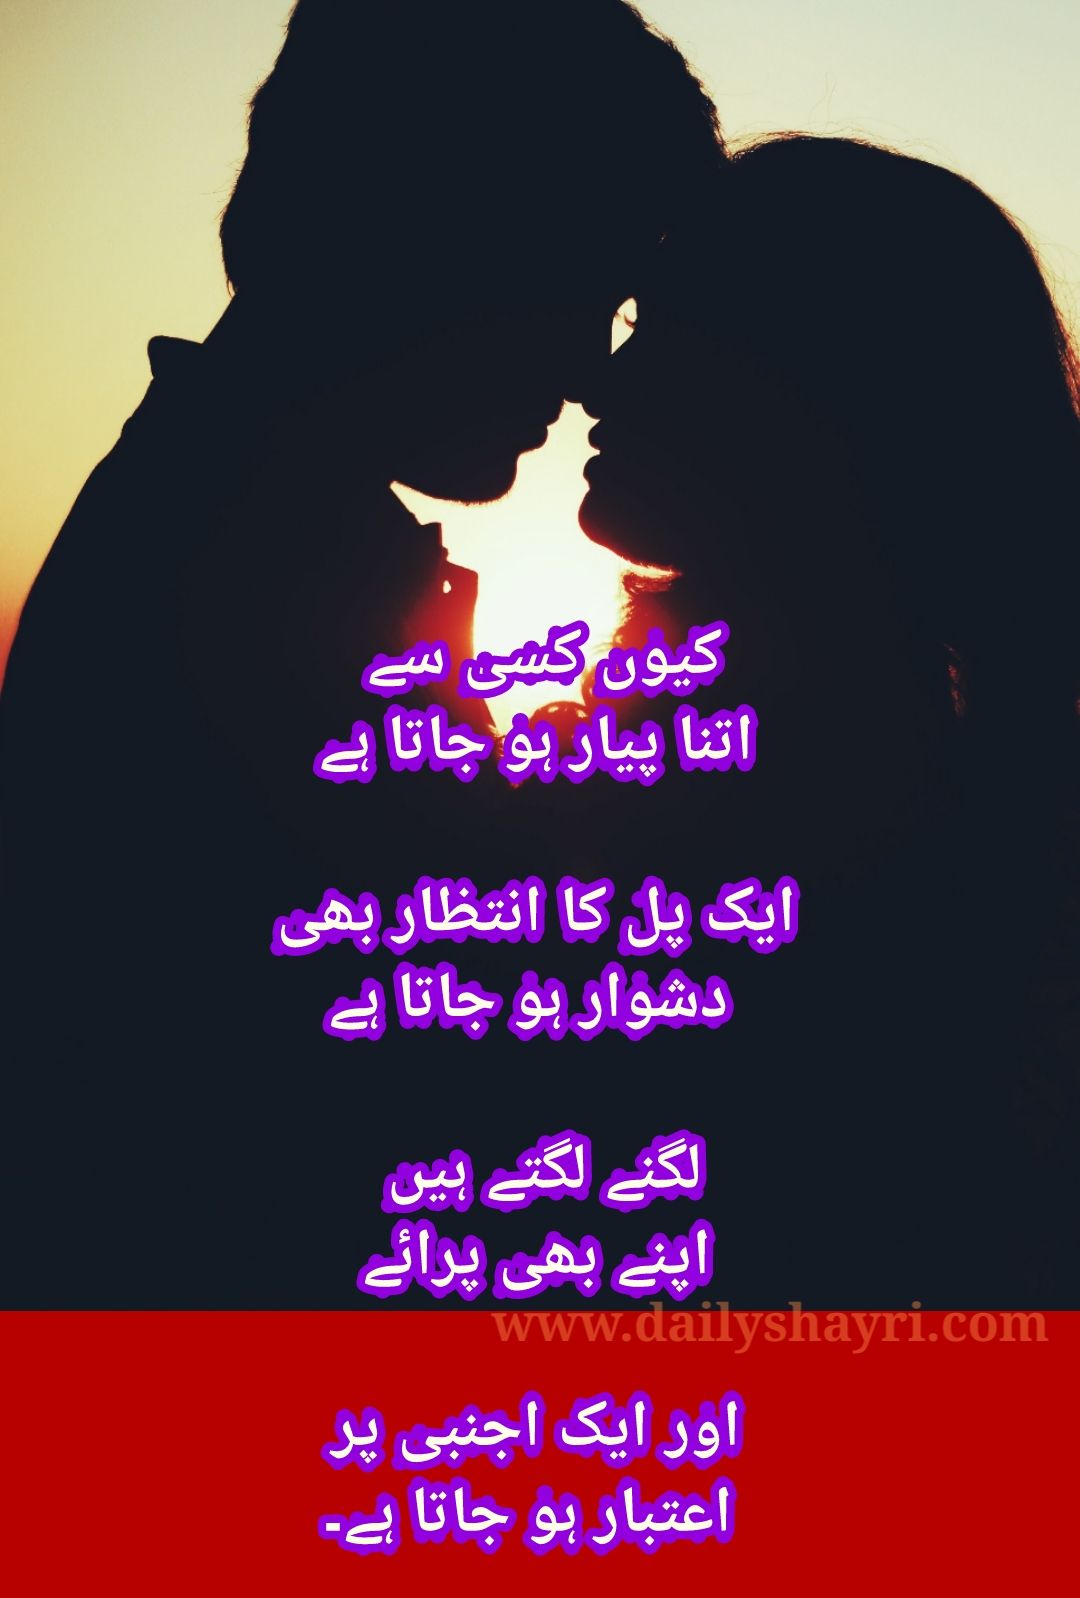 2020 Urdu Love Shayari Images Hd – Hindi Shayari Love Shayari Love Quotes Hd Images